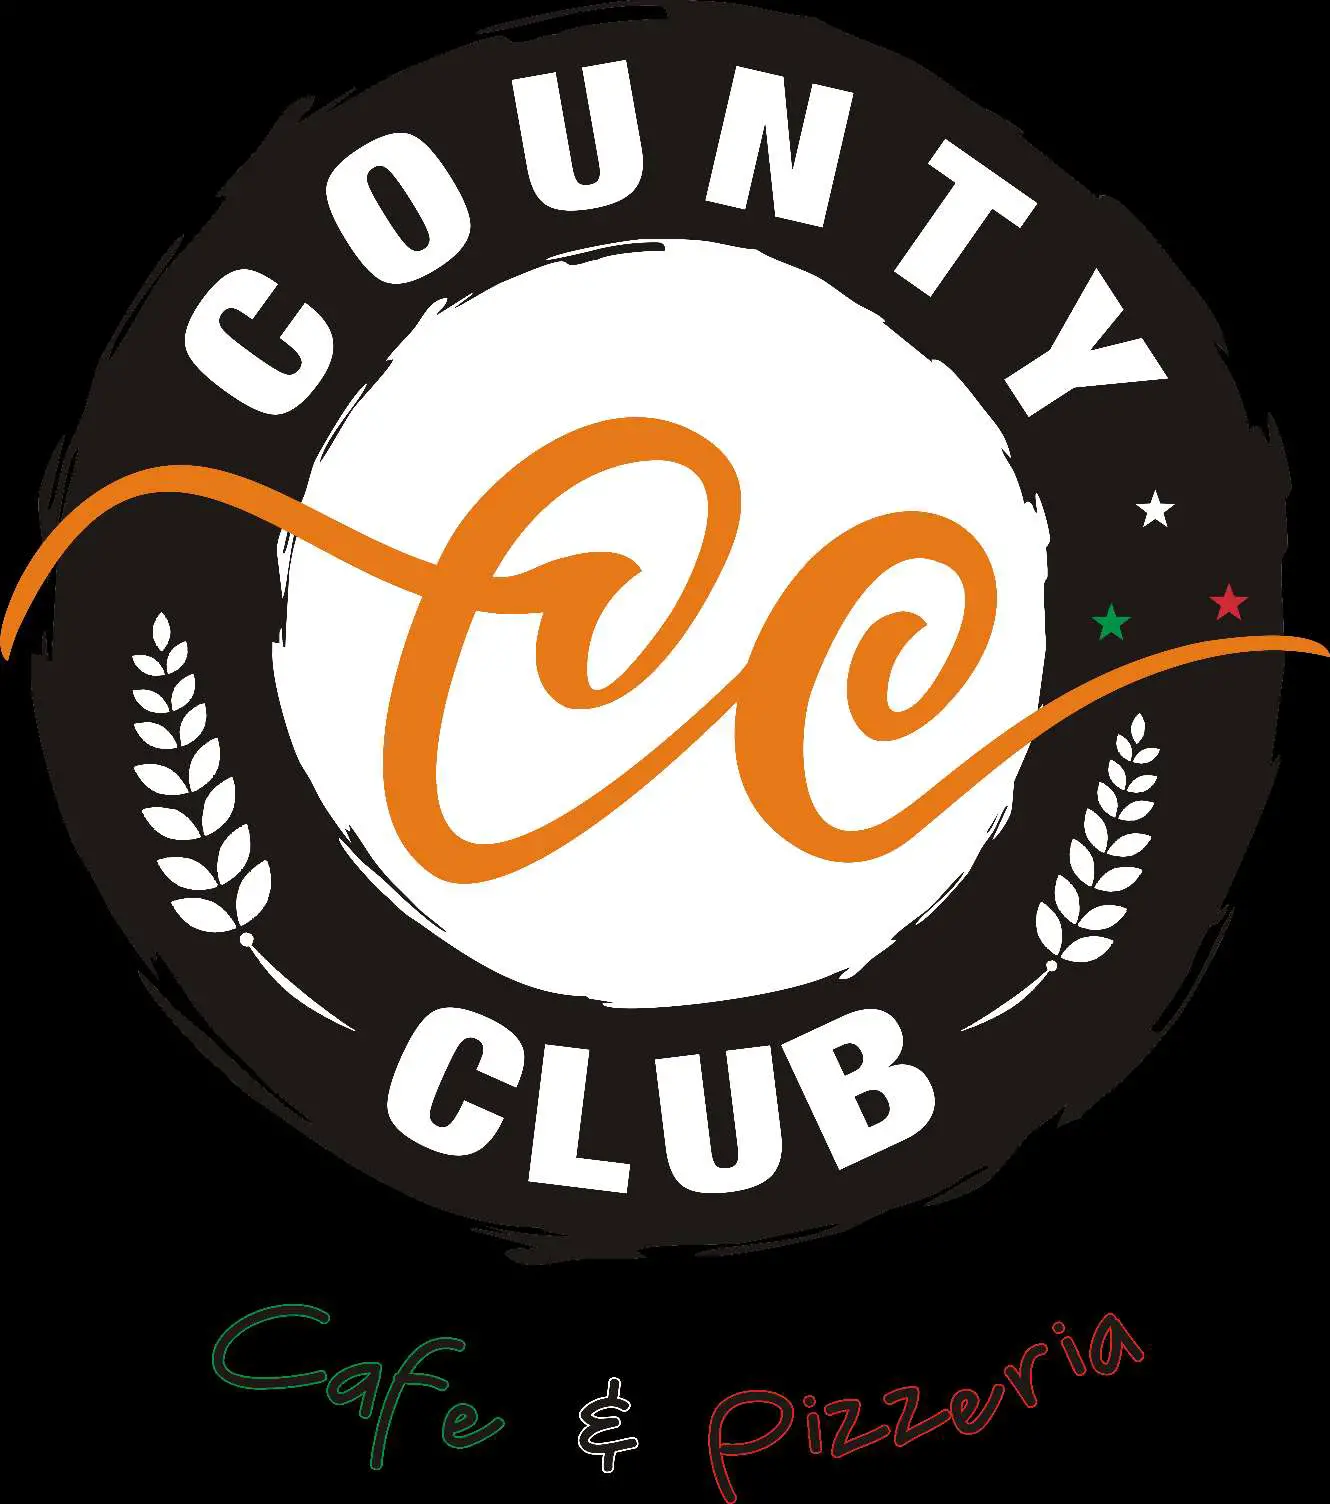 Company logo of countylcubcafe